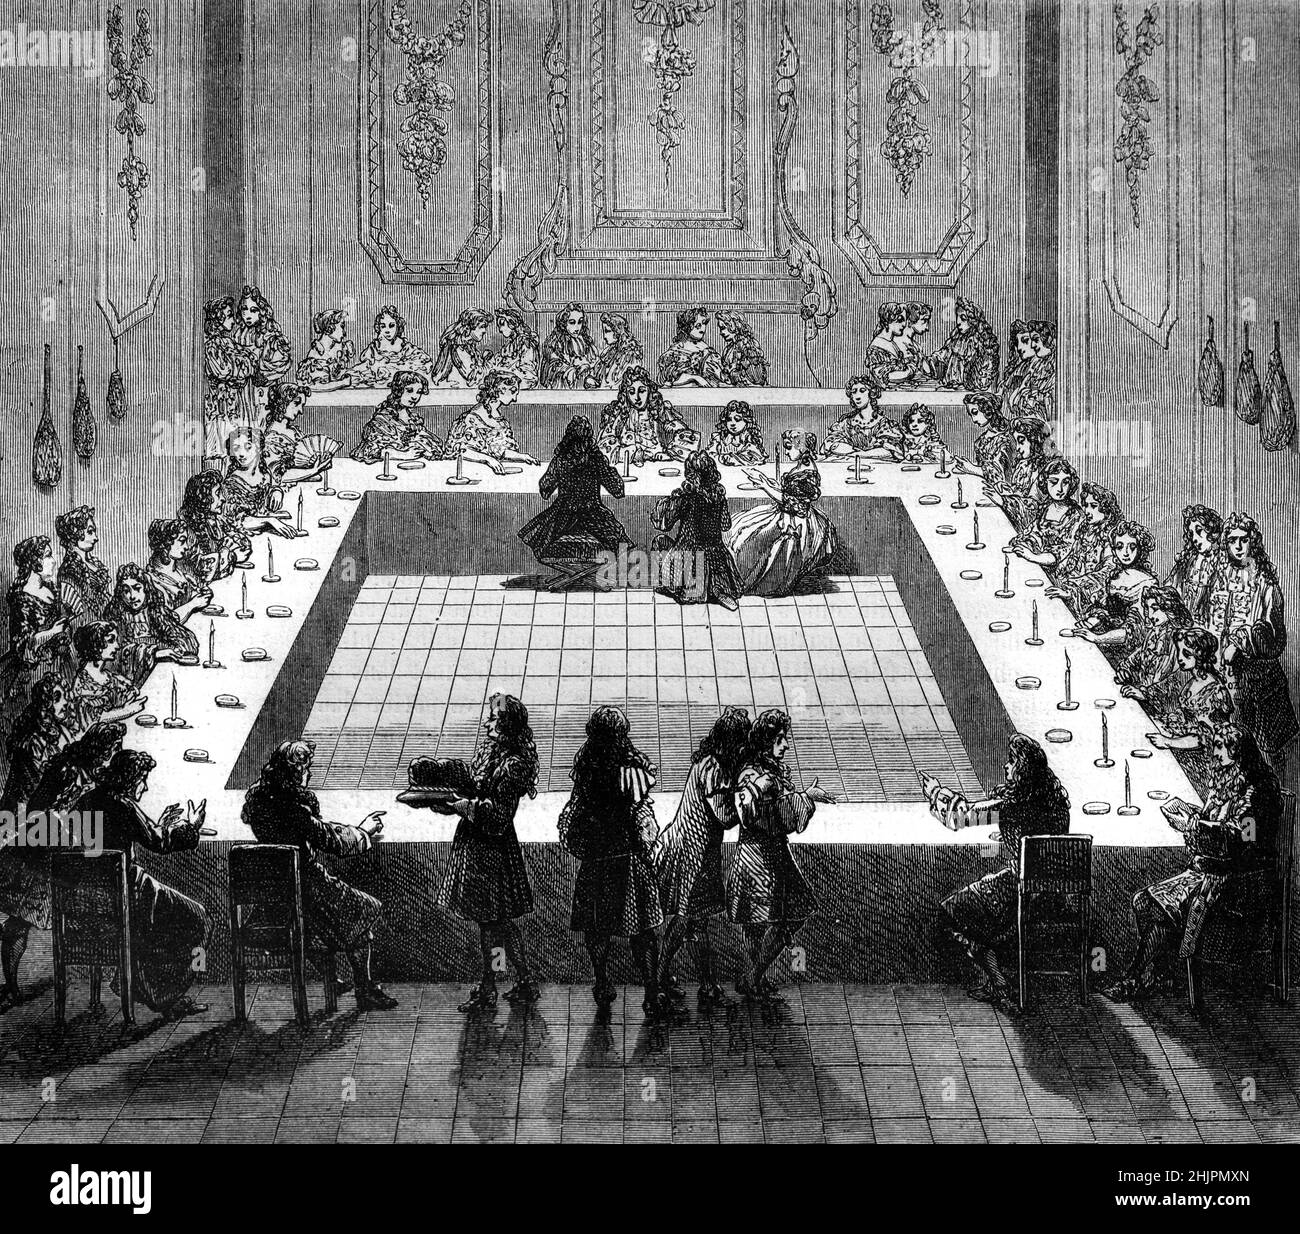 Louis XIV - Sun King ( From 1643) War Themed Chess Set